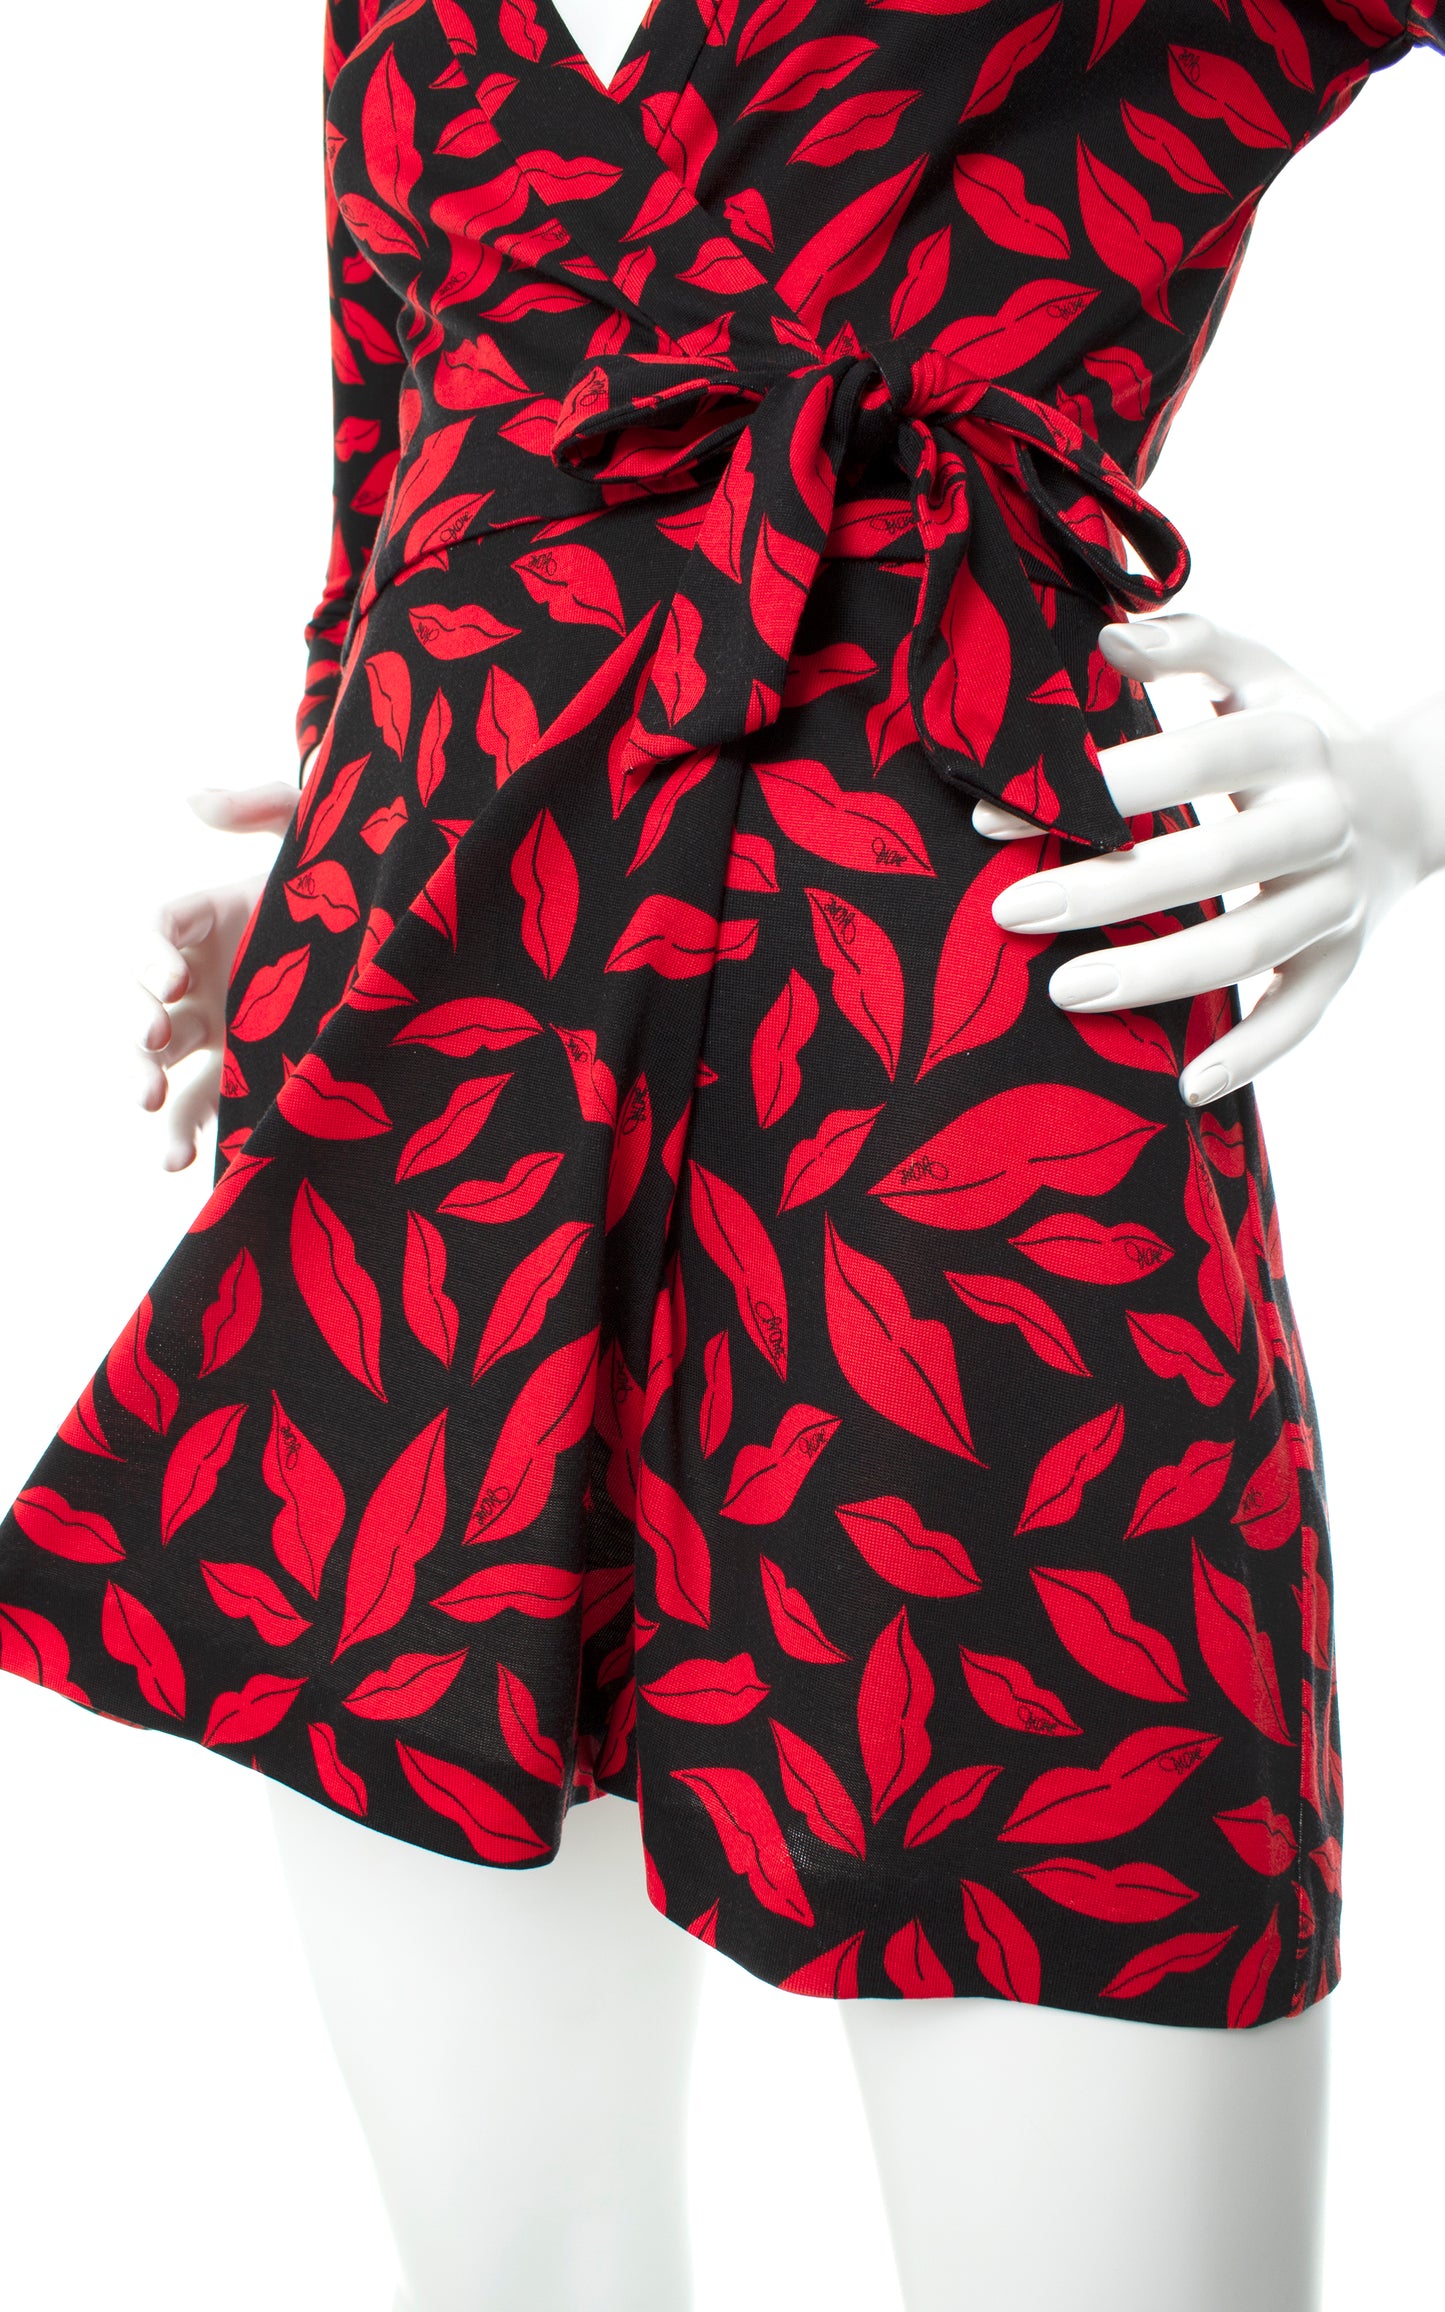 DIANE VON FURSTENBERG Silk Jersey Red Lips Novelty Print Black Shorts Wrap Romper | x-small/small | Birthday Life Vintage